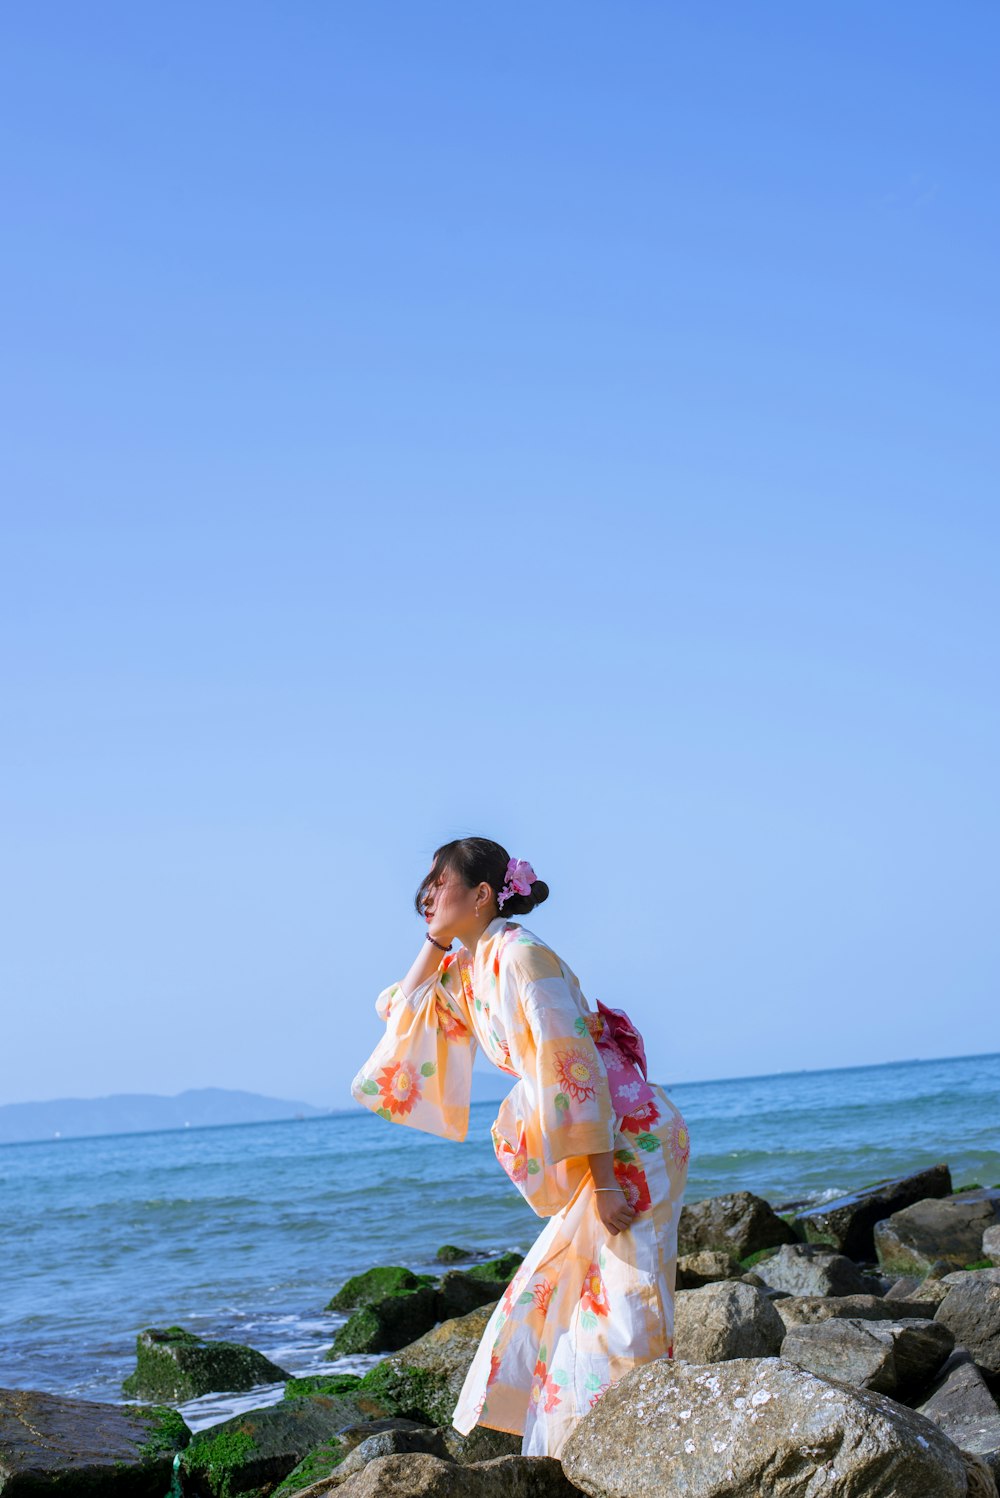 a woman in a kimono standing on rocks near the ocean